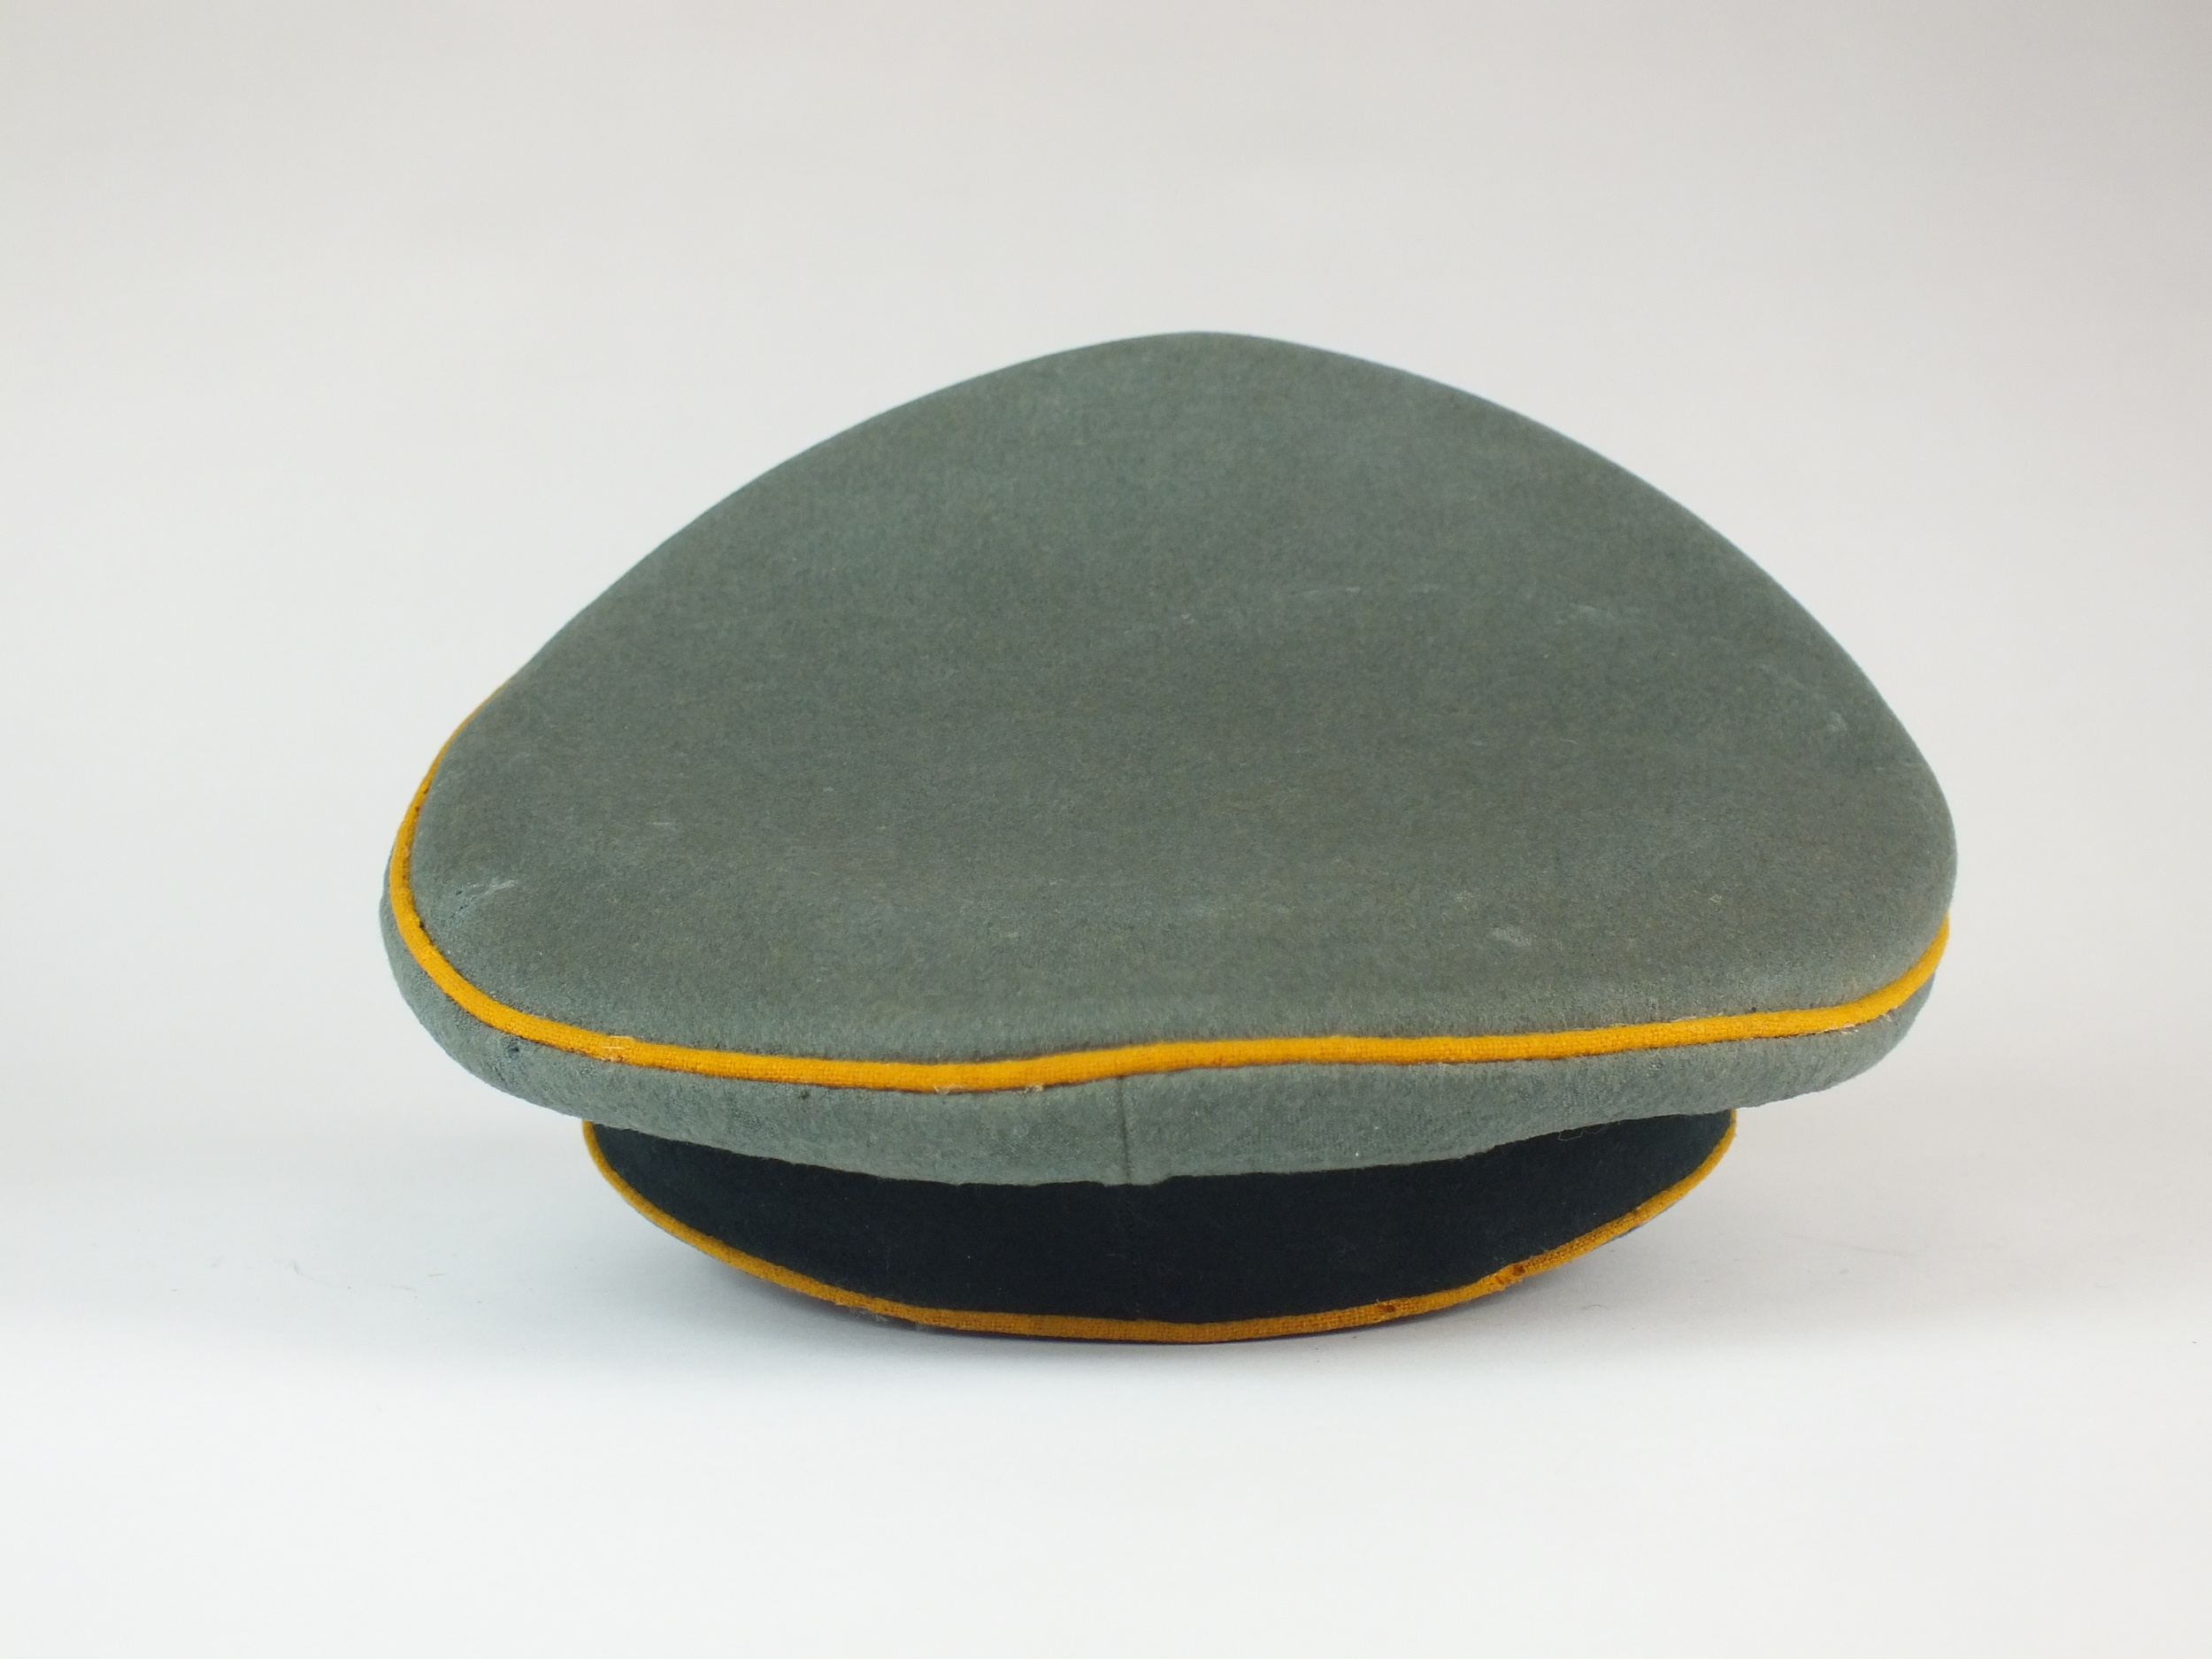 German Army Cavalry NCO's visor cap by Erel - Image 4 of 7